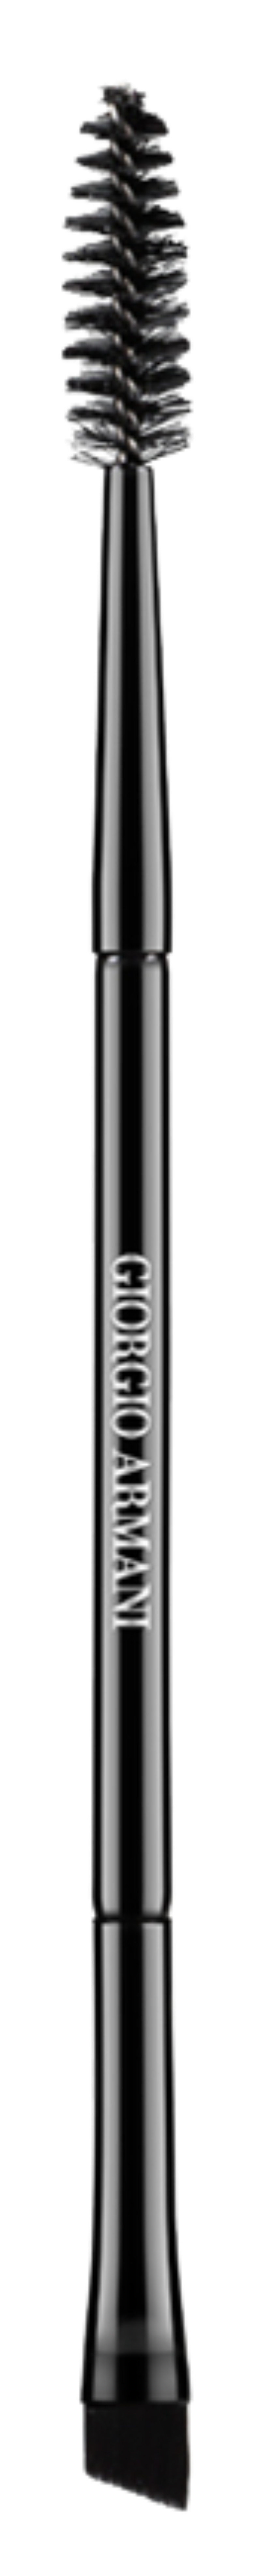 Giorgio Armani - Eye & Brow Maestro Brush